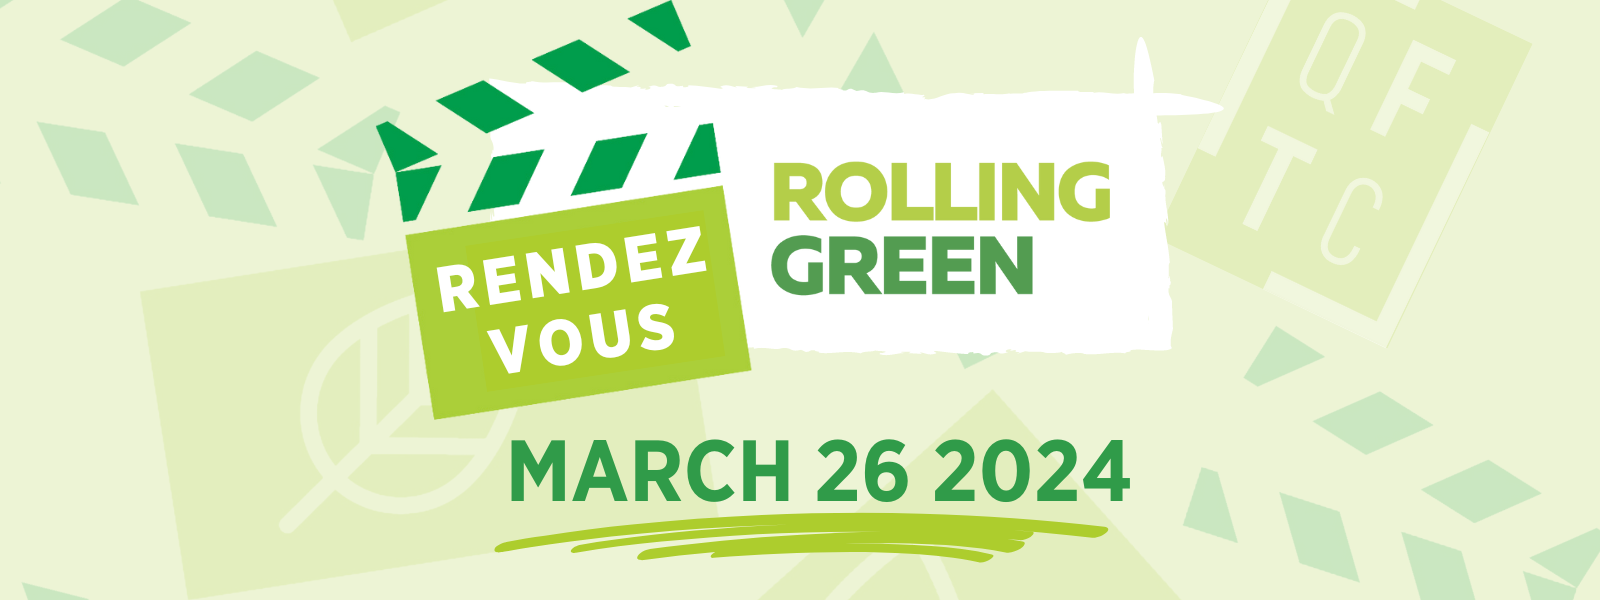 Rolling Green Rendez-Vous